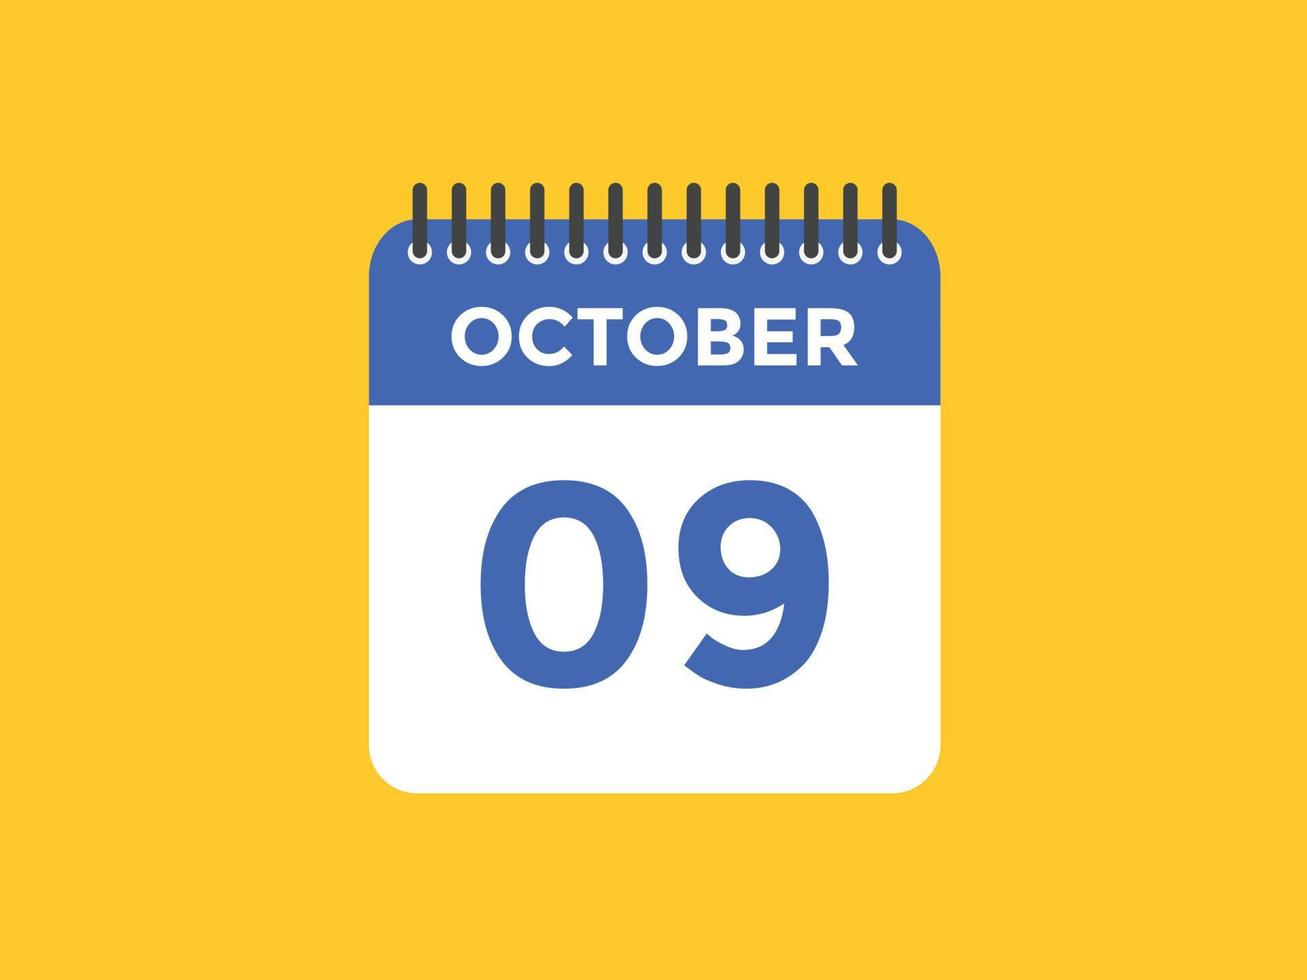 october 9 calendar reminder. 9th october daily calendar icon template. Calendar 9th october icon Design template. Vector illustration